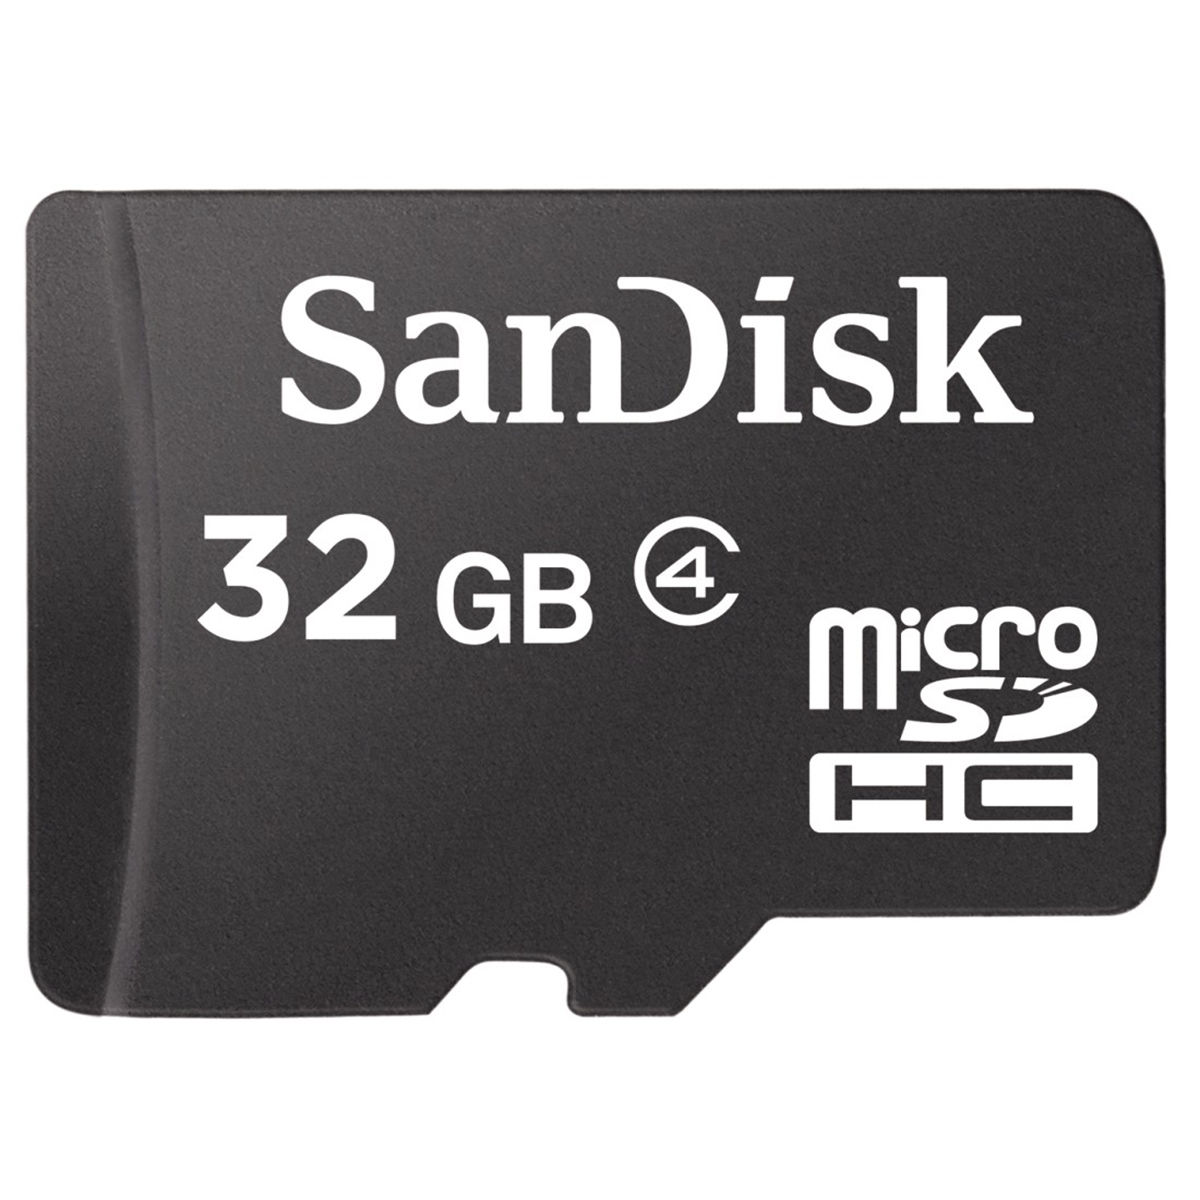 Sandisk - Carte mémoire micro SDHC 32GB (104374)